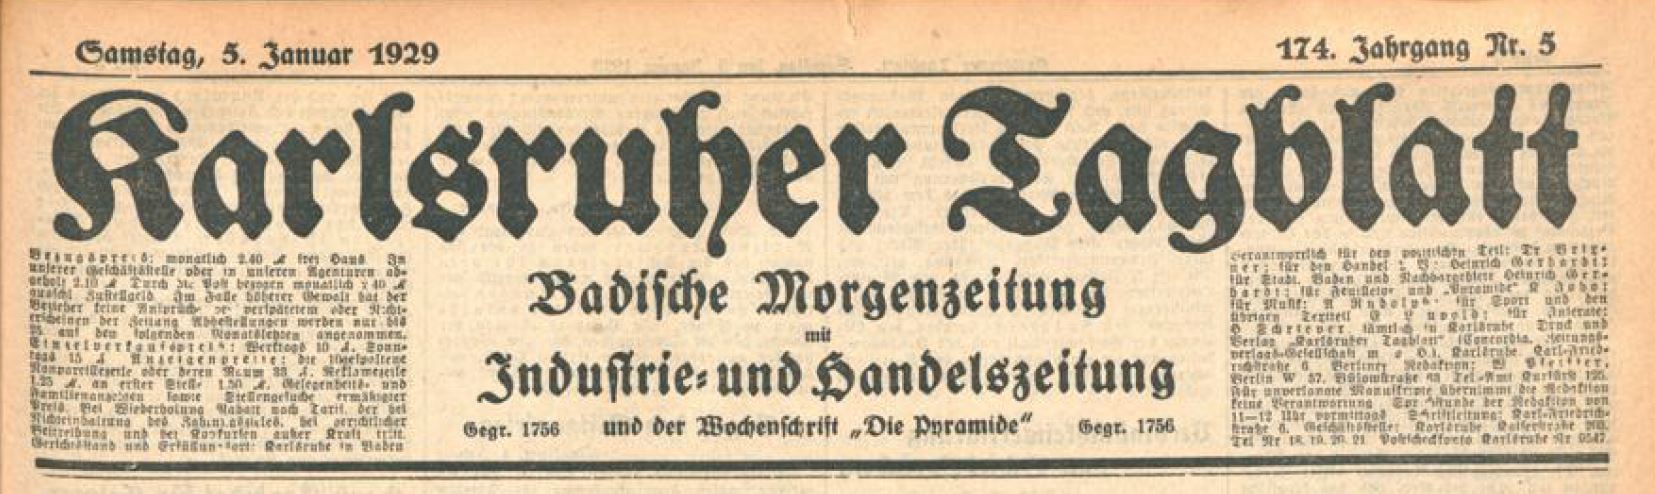 Karlsruher Tagblatt 1929: Wandbild in der Schule Palmbach, Hans Fischer-Schuppach